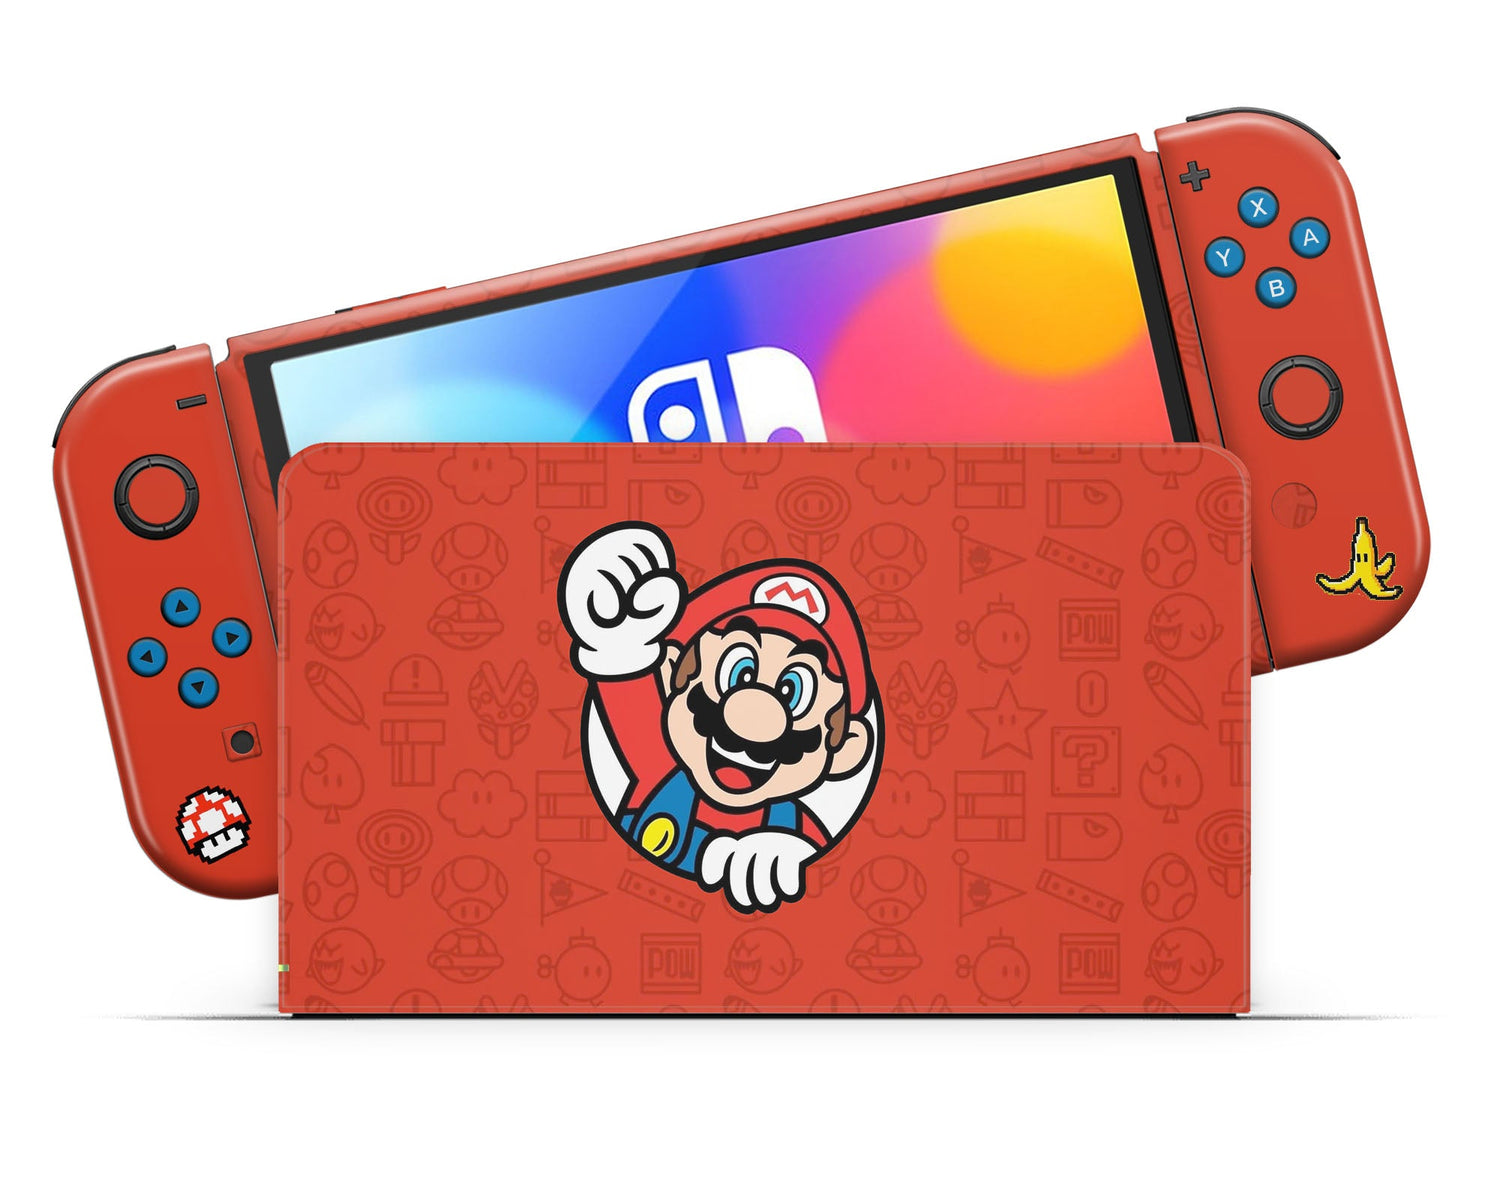 Lux Skins Nintendo Switch OLED Mario Minimalist Full Set Skins - Pop Culture Mario Skin